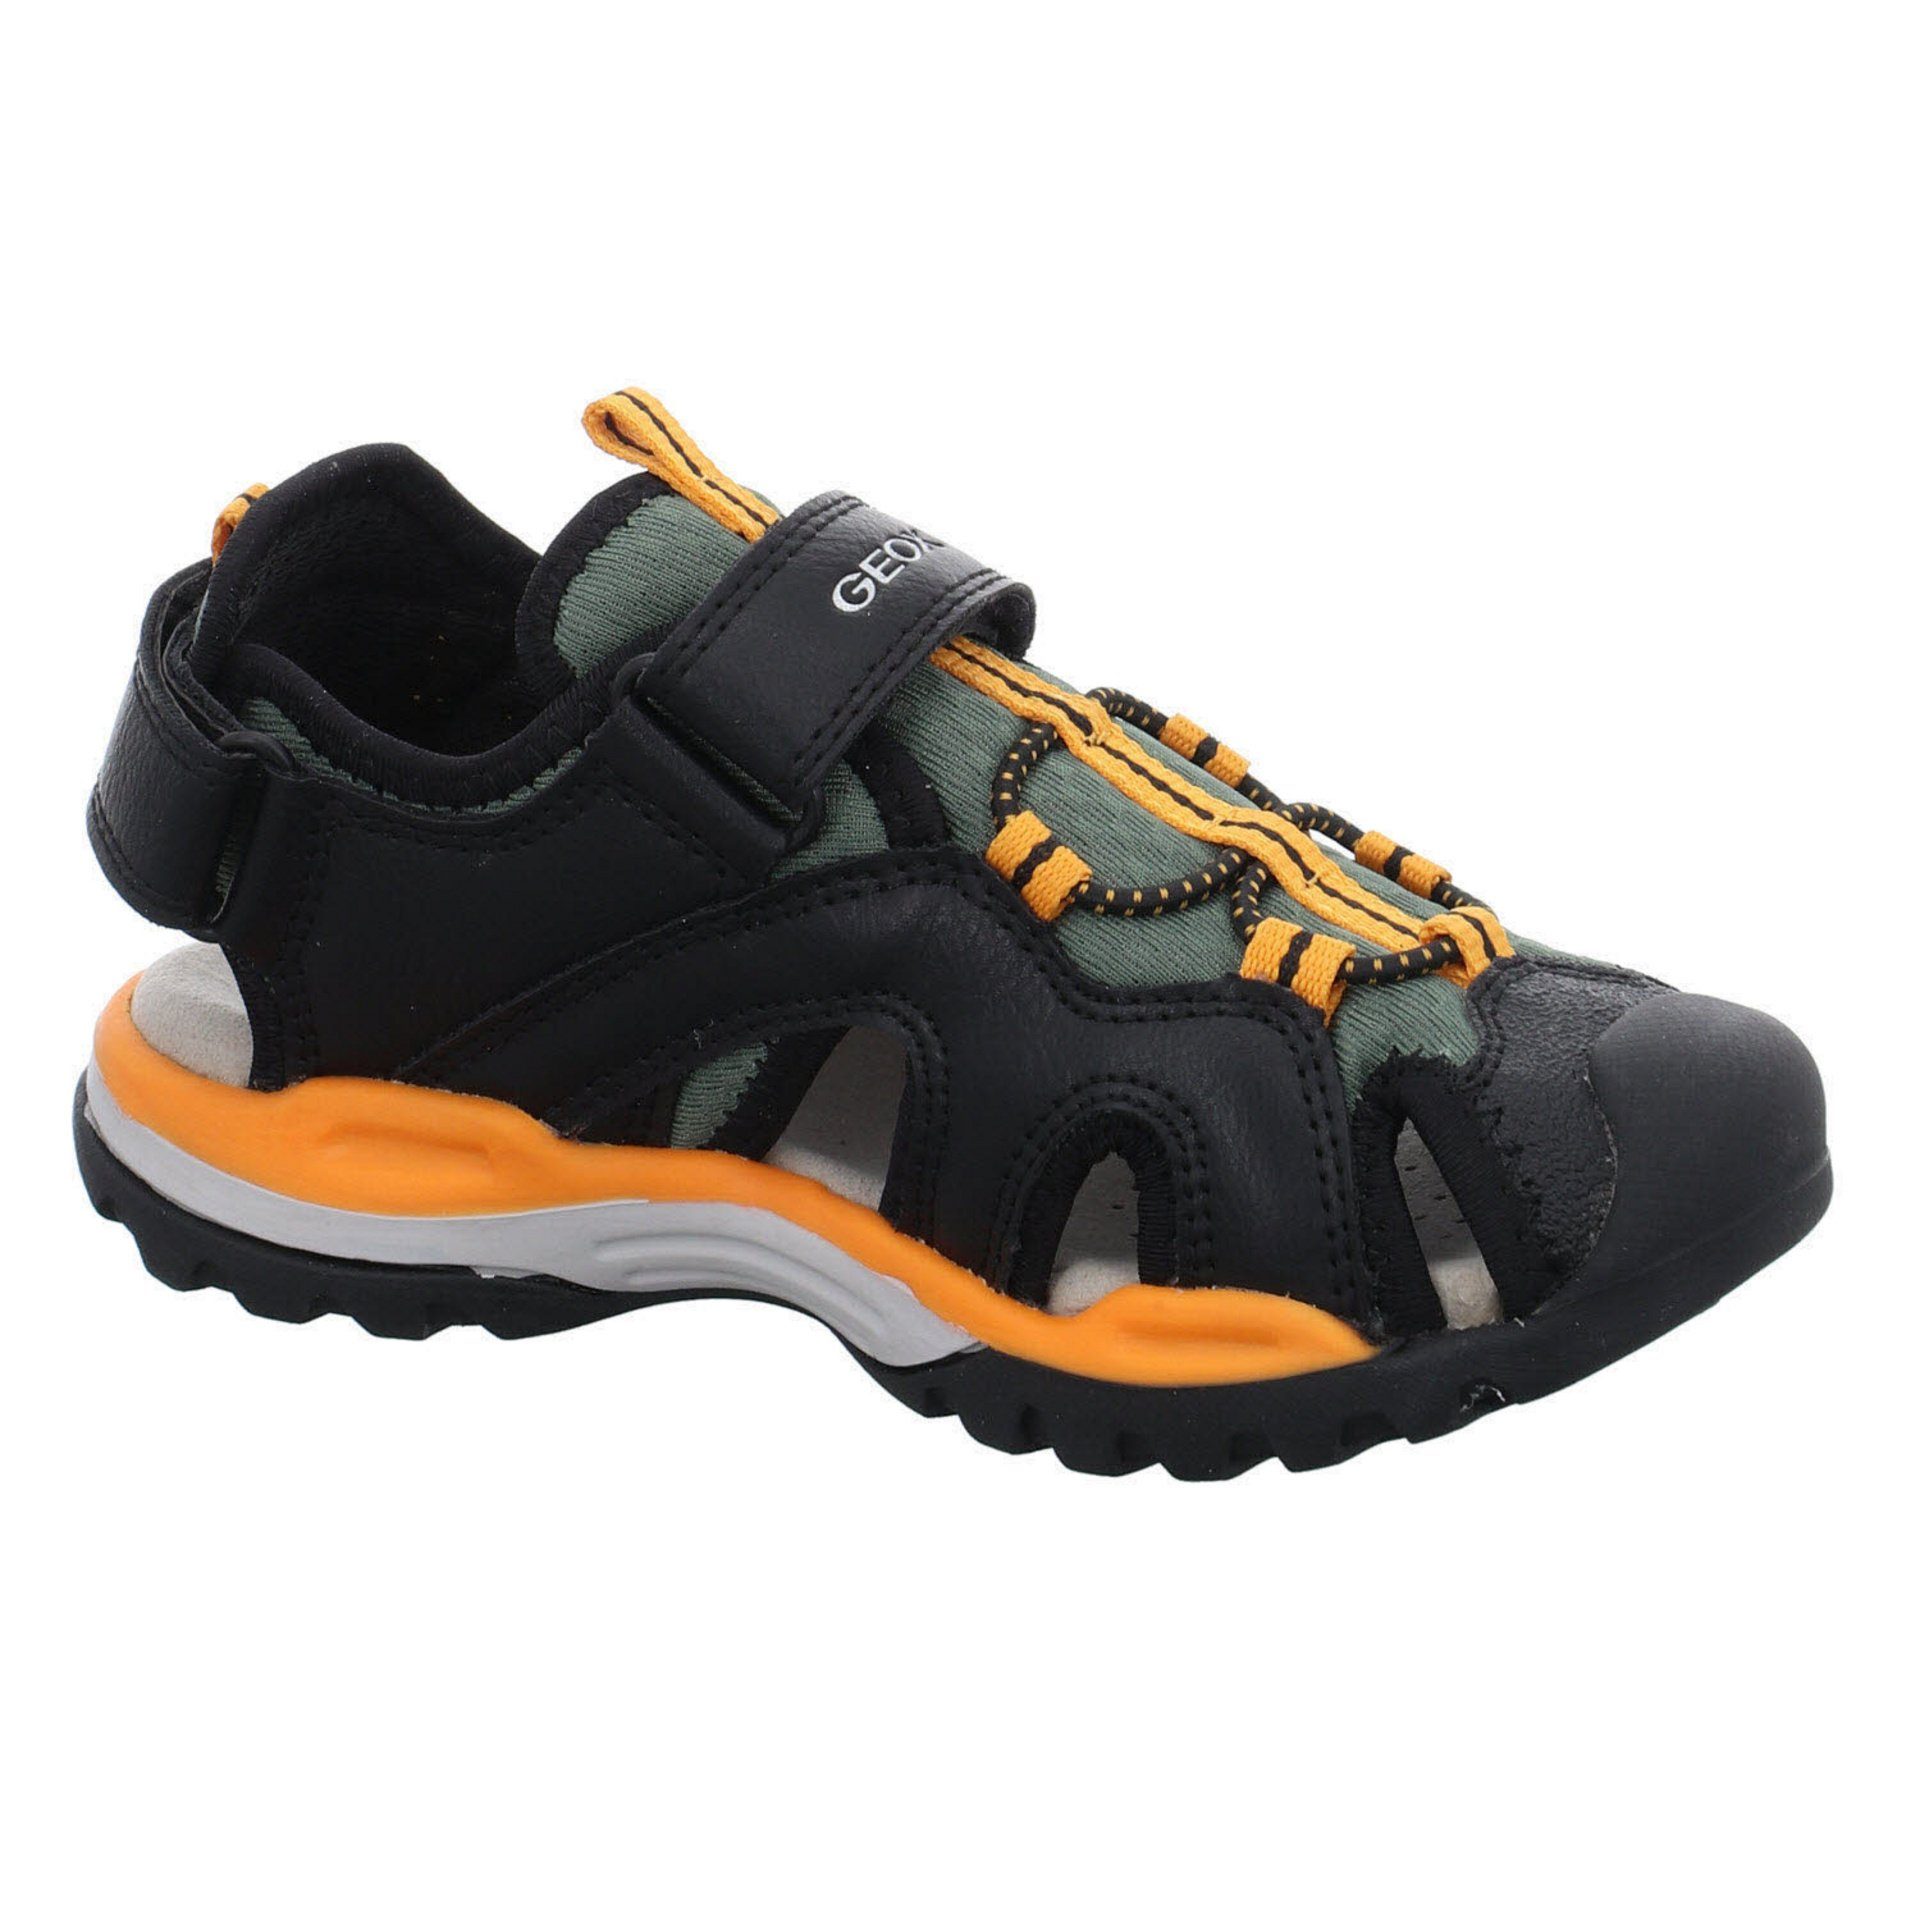 Borealis Outdoorsandale Geox Sandale Schuhe Synthetikkombination Schwarz Jungen Sandalen Orange